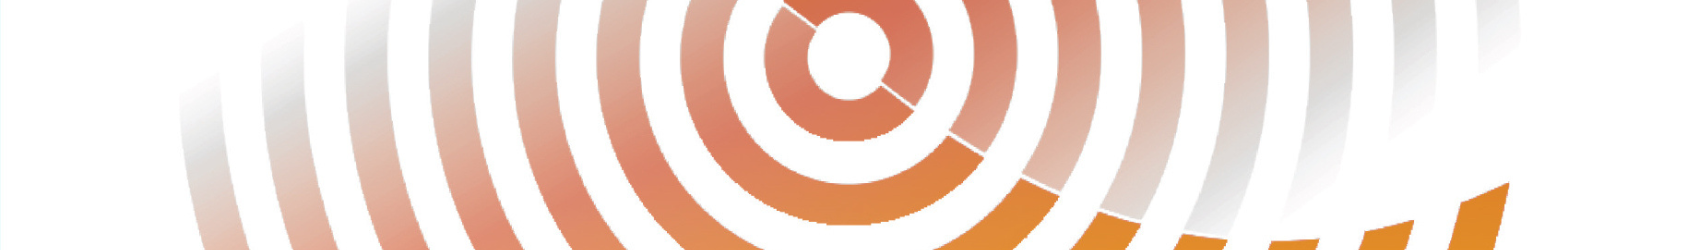 orange swirl graphic on white background